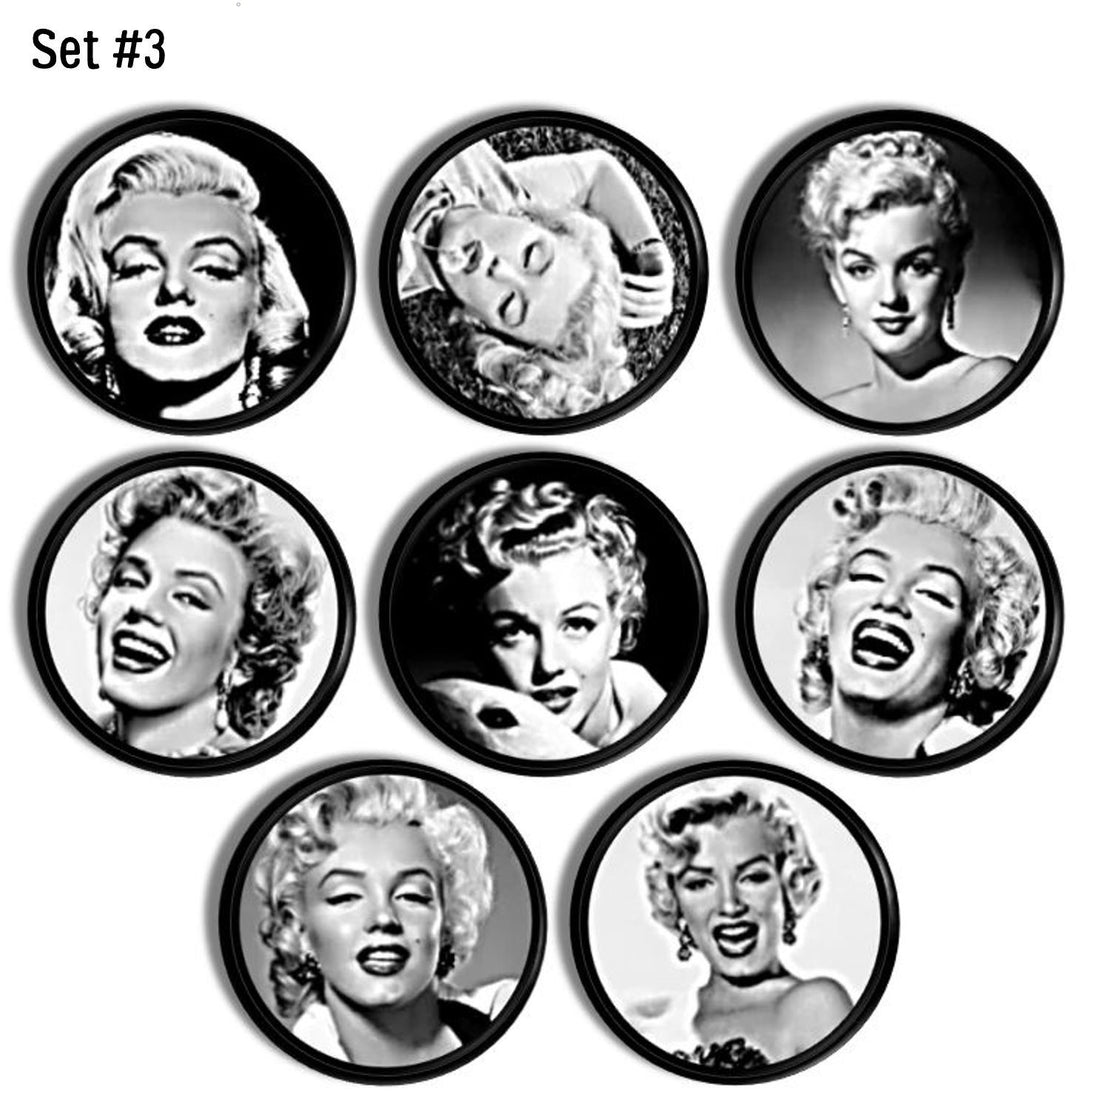 1950s era decor cabinet drawer pull set. Classic 50s Marilyn Monroe Cinema photo furniture knobs for decorative hardware.